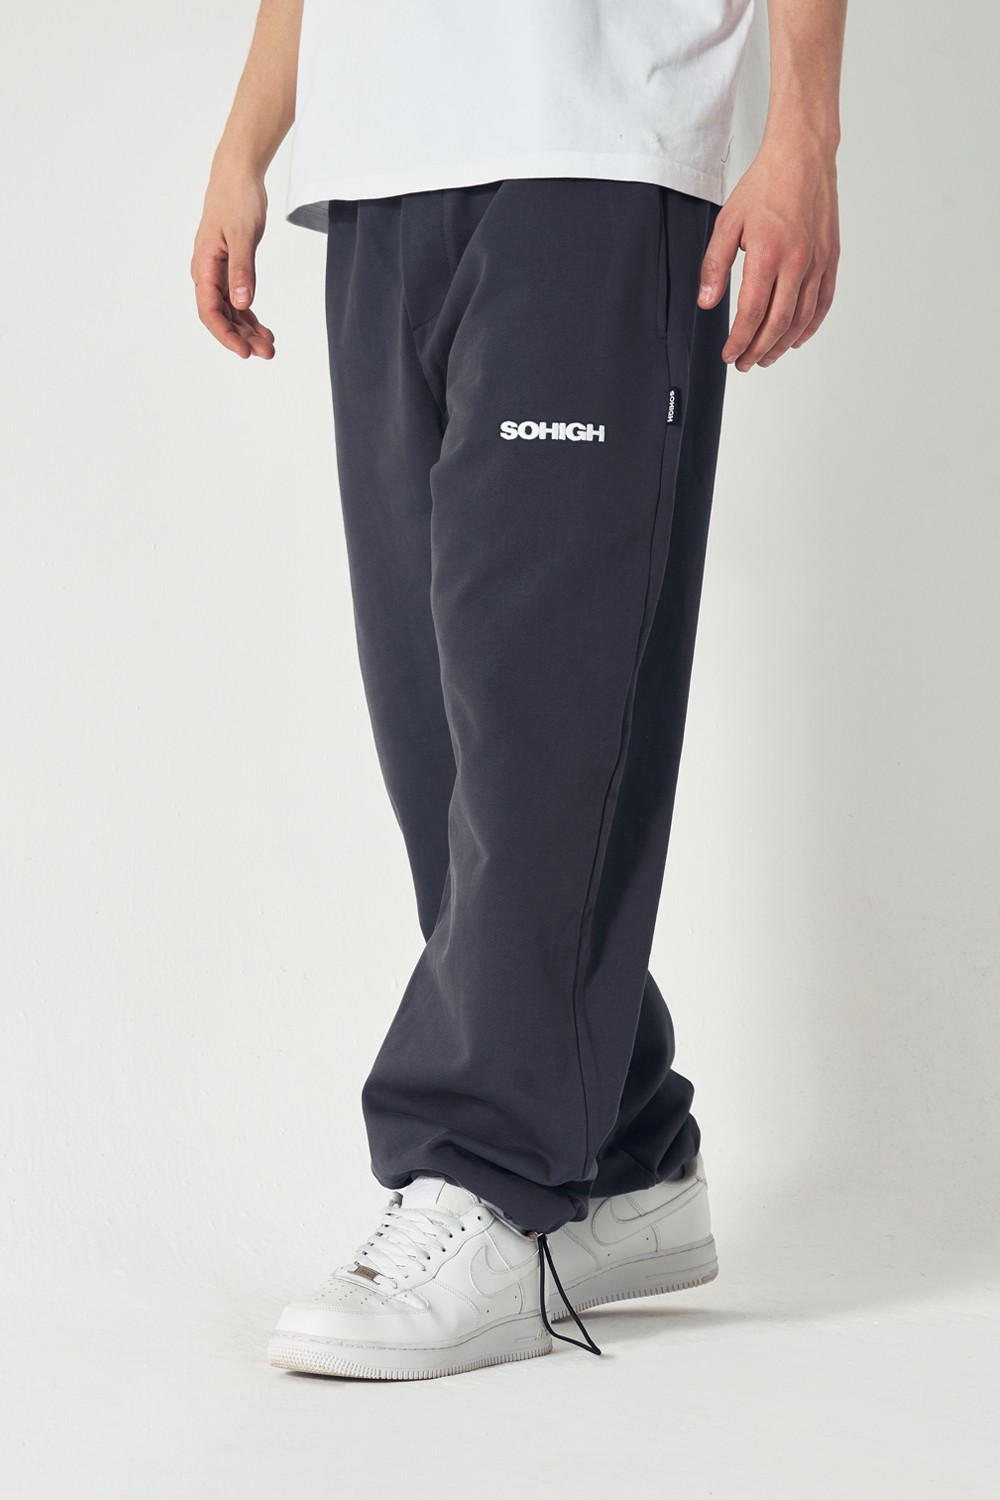 Sohigh Heavyweight Oversized Sweatpant (SWTP-2)